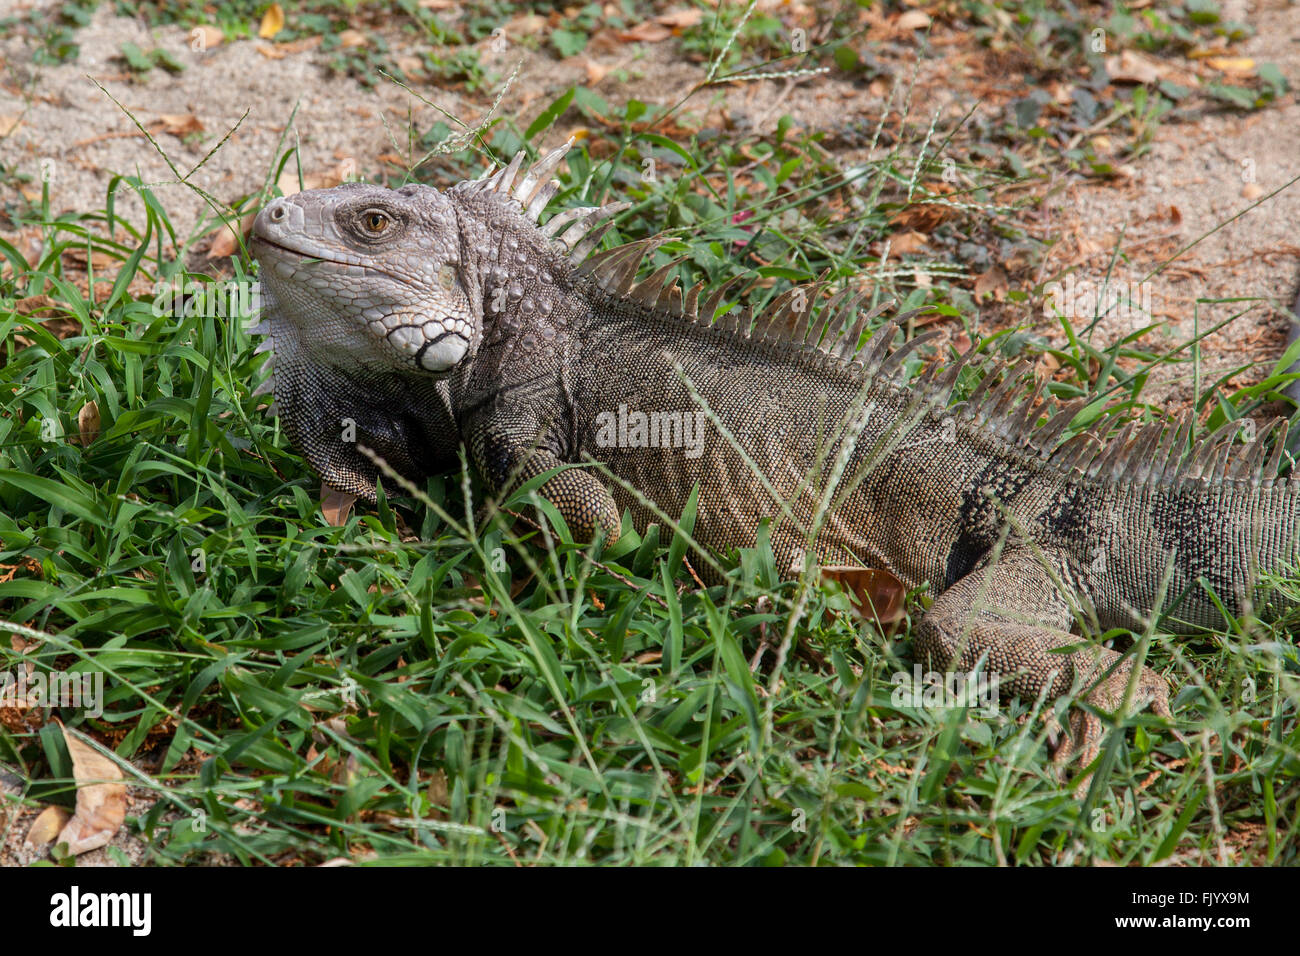 Iquana lizard Stock Photo